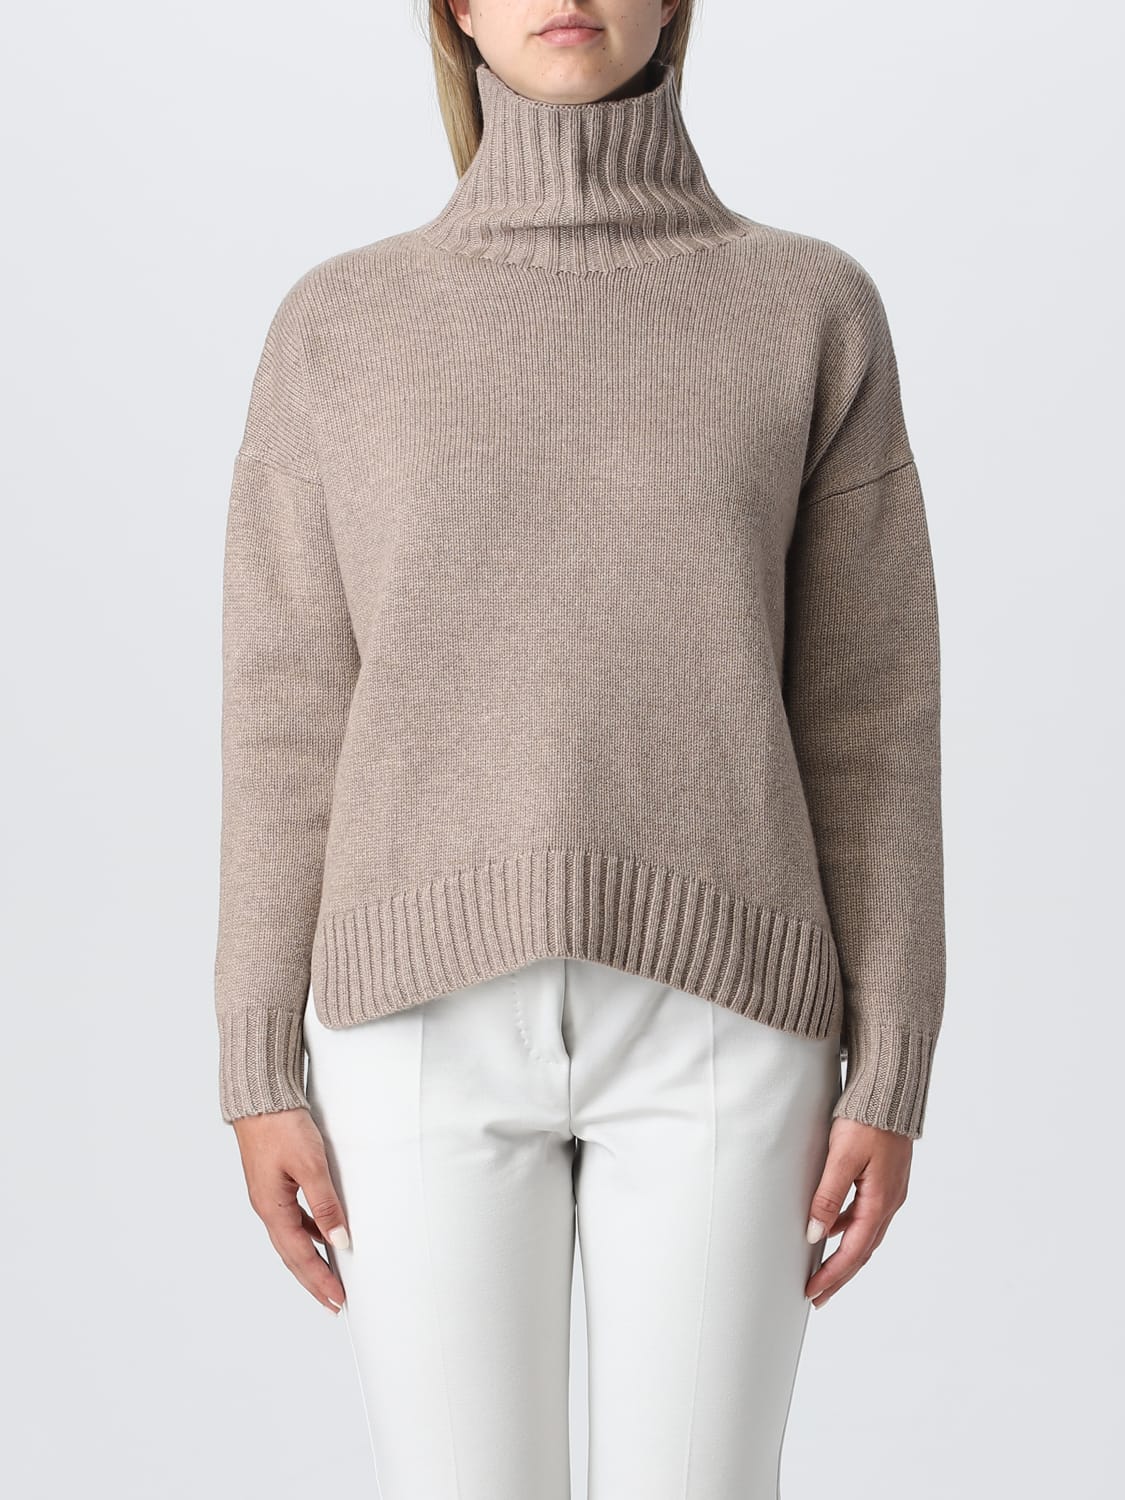 MAX MARA: sweater in wool and cashmere blend - Natural | Max Mara ...